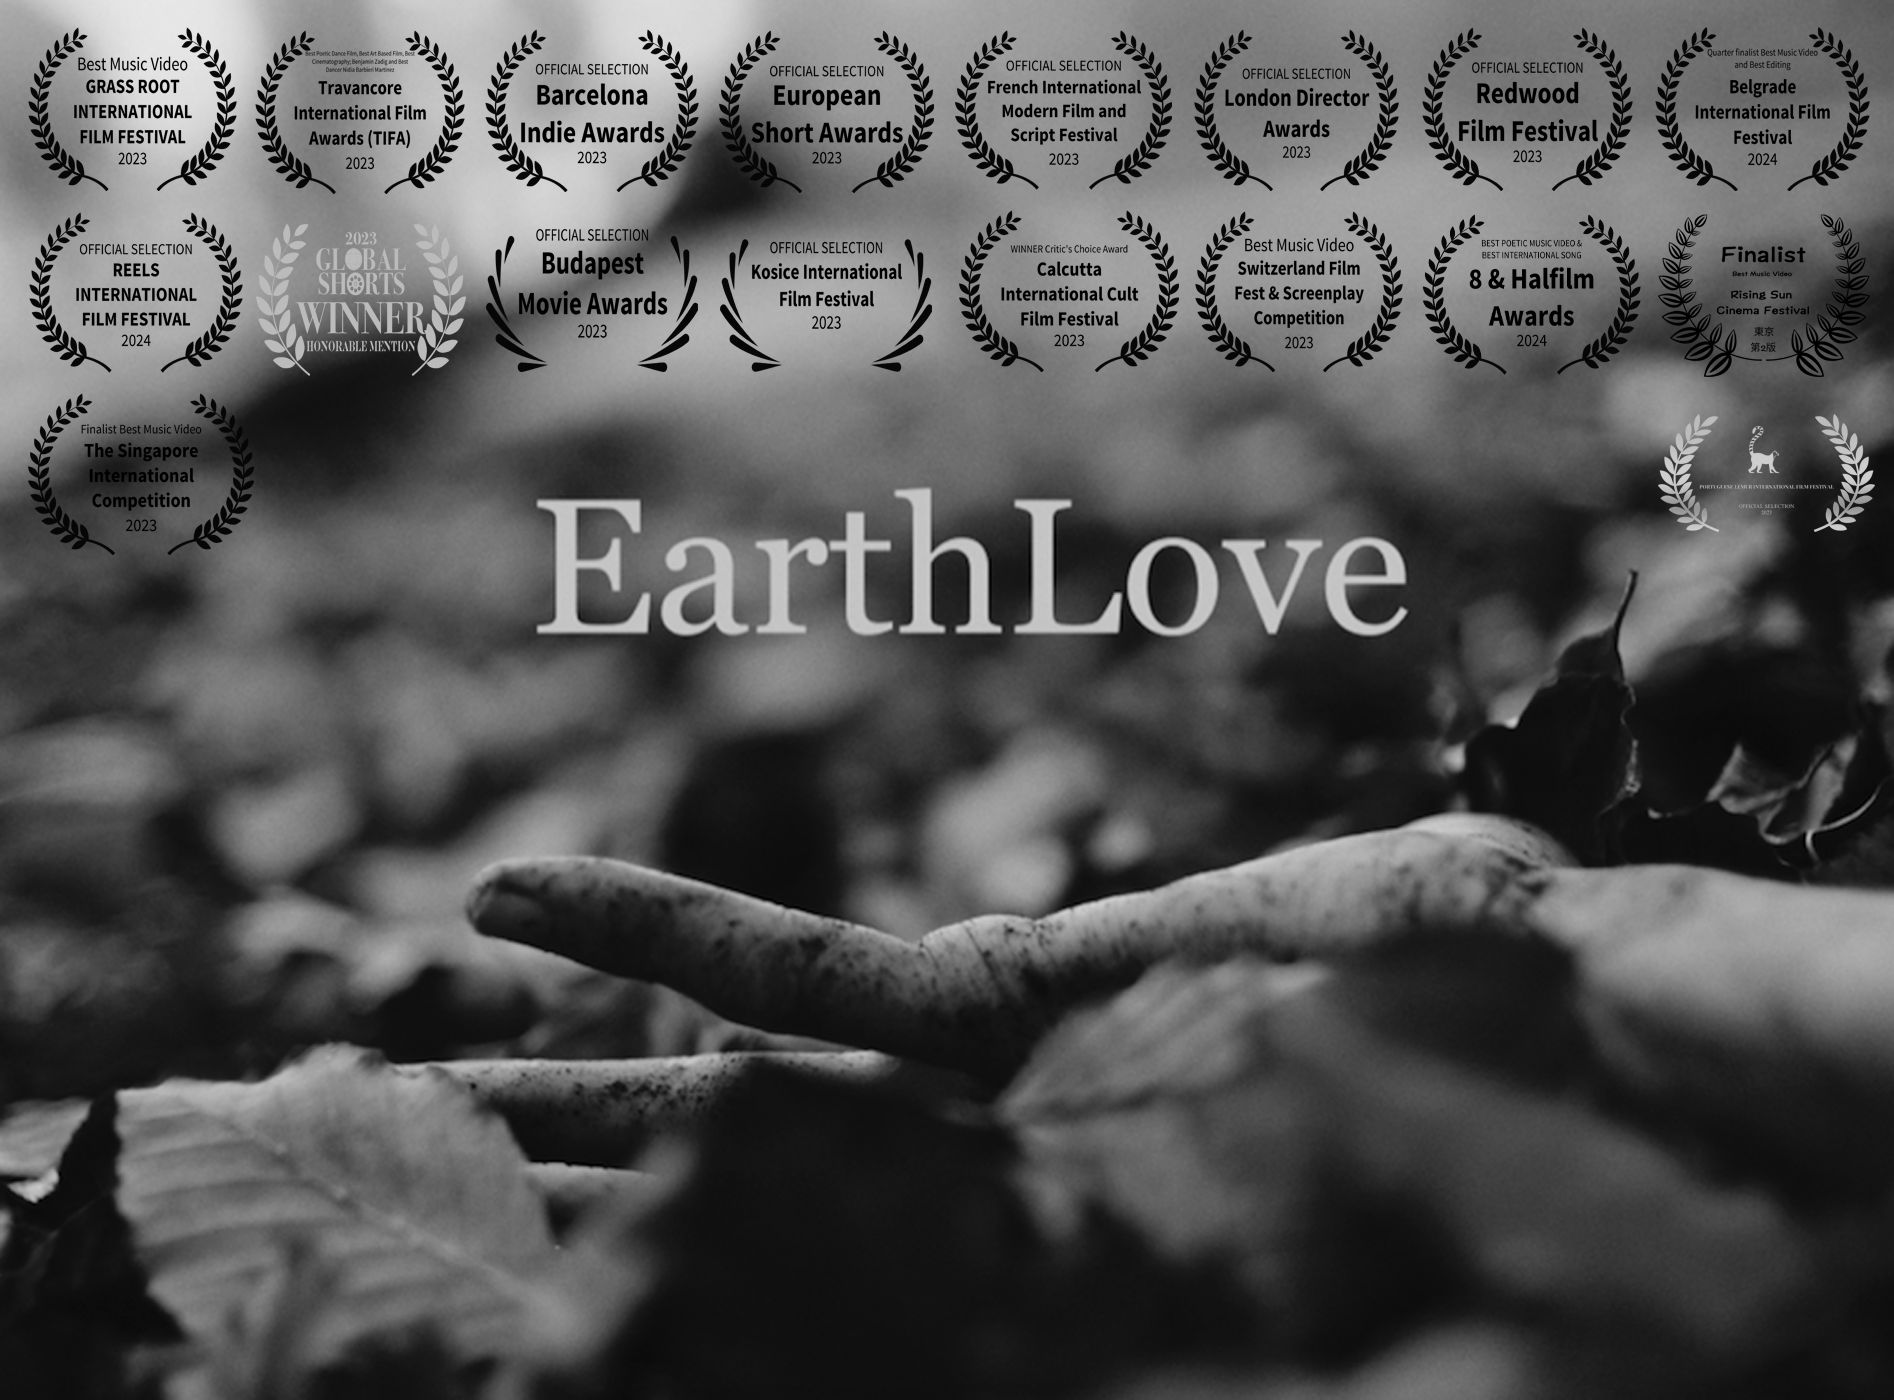 EarthLove by I Still Live in Water (Felicia Konrad and Johan Haugen)"